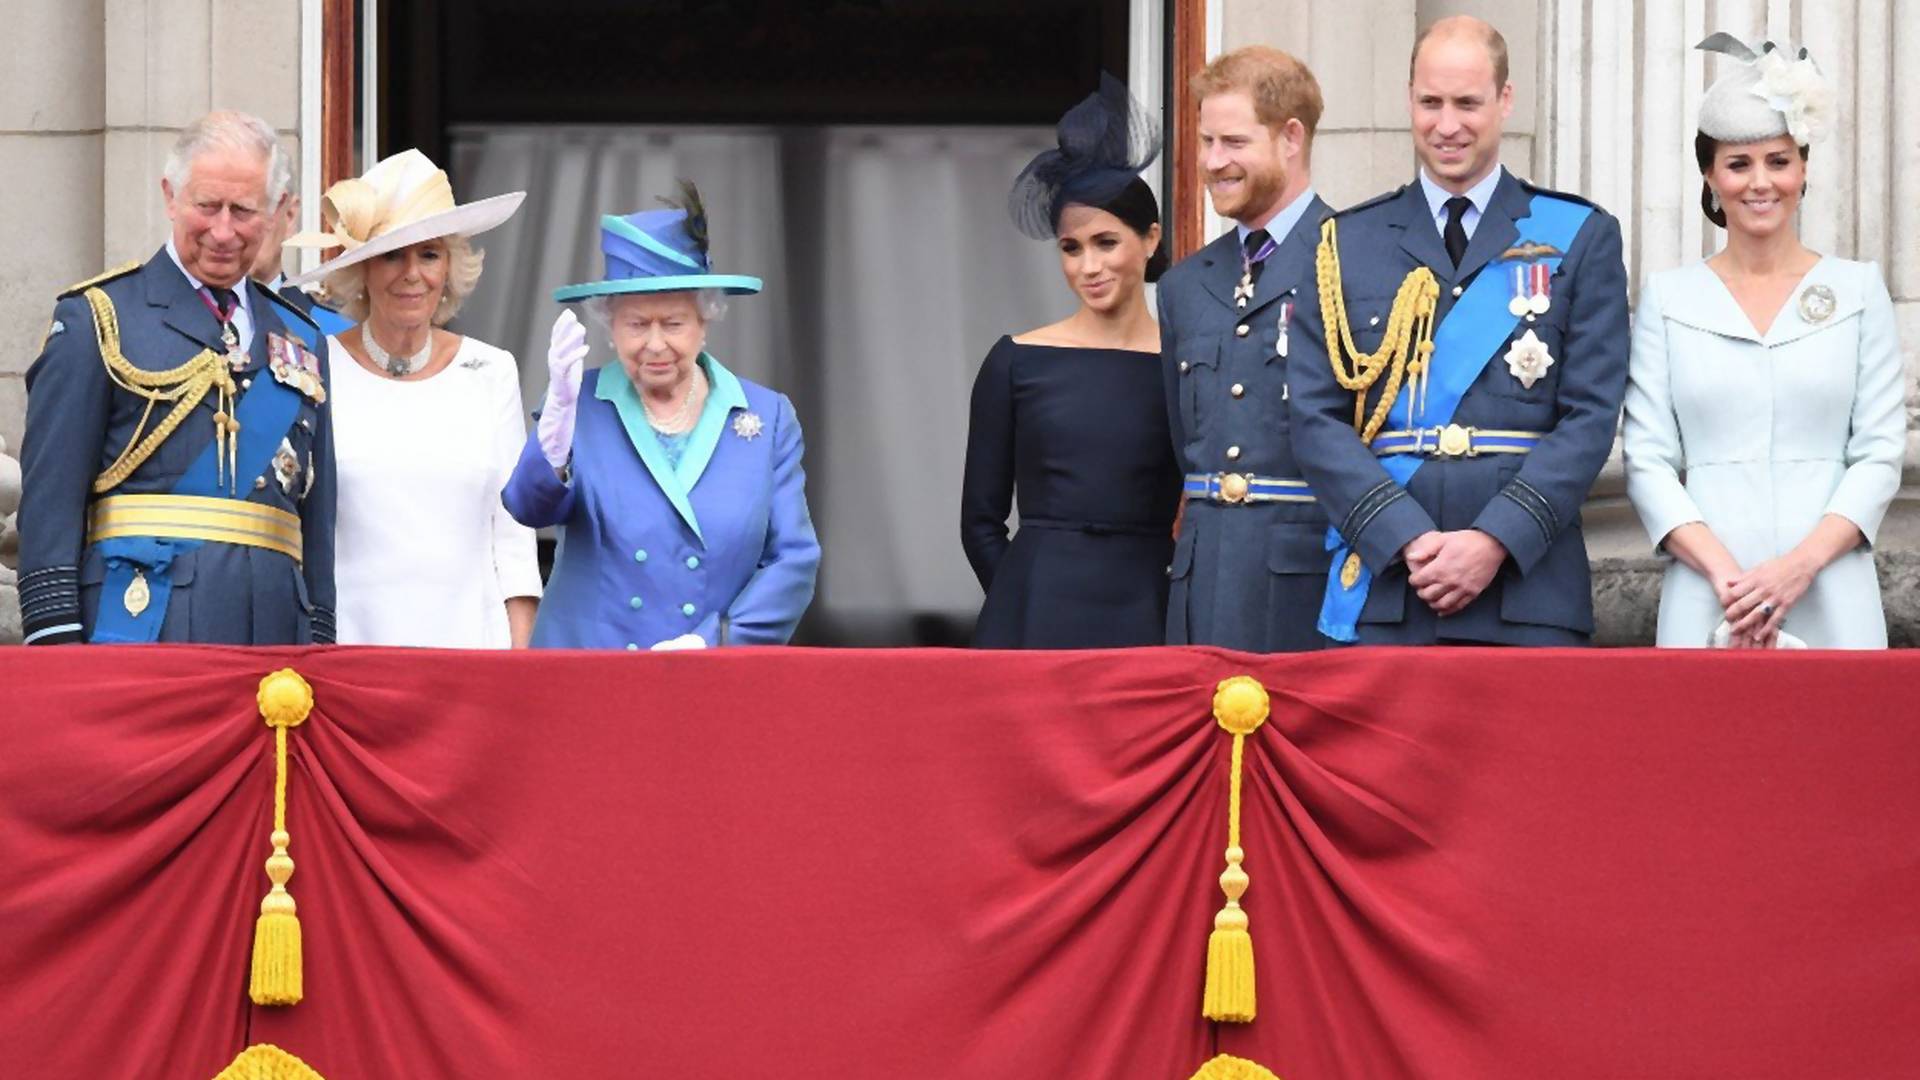 Britanska kraljevska porodica nudi posao - nije potrebno ni iskustvo ni diploma, a plata je 20.000 funti